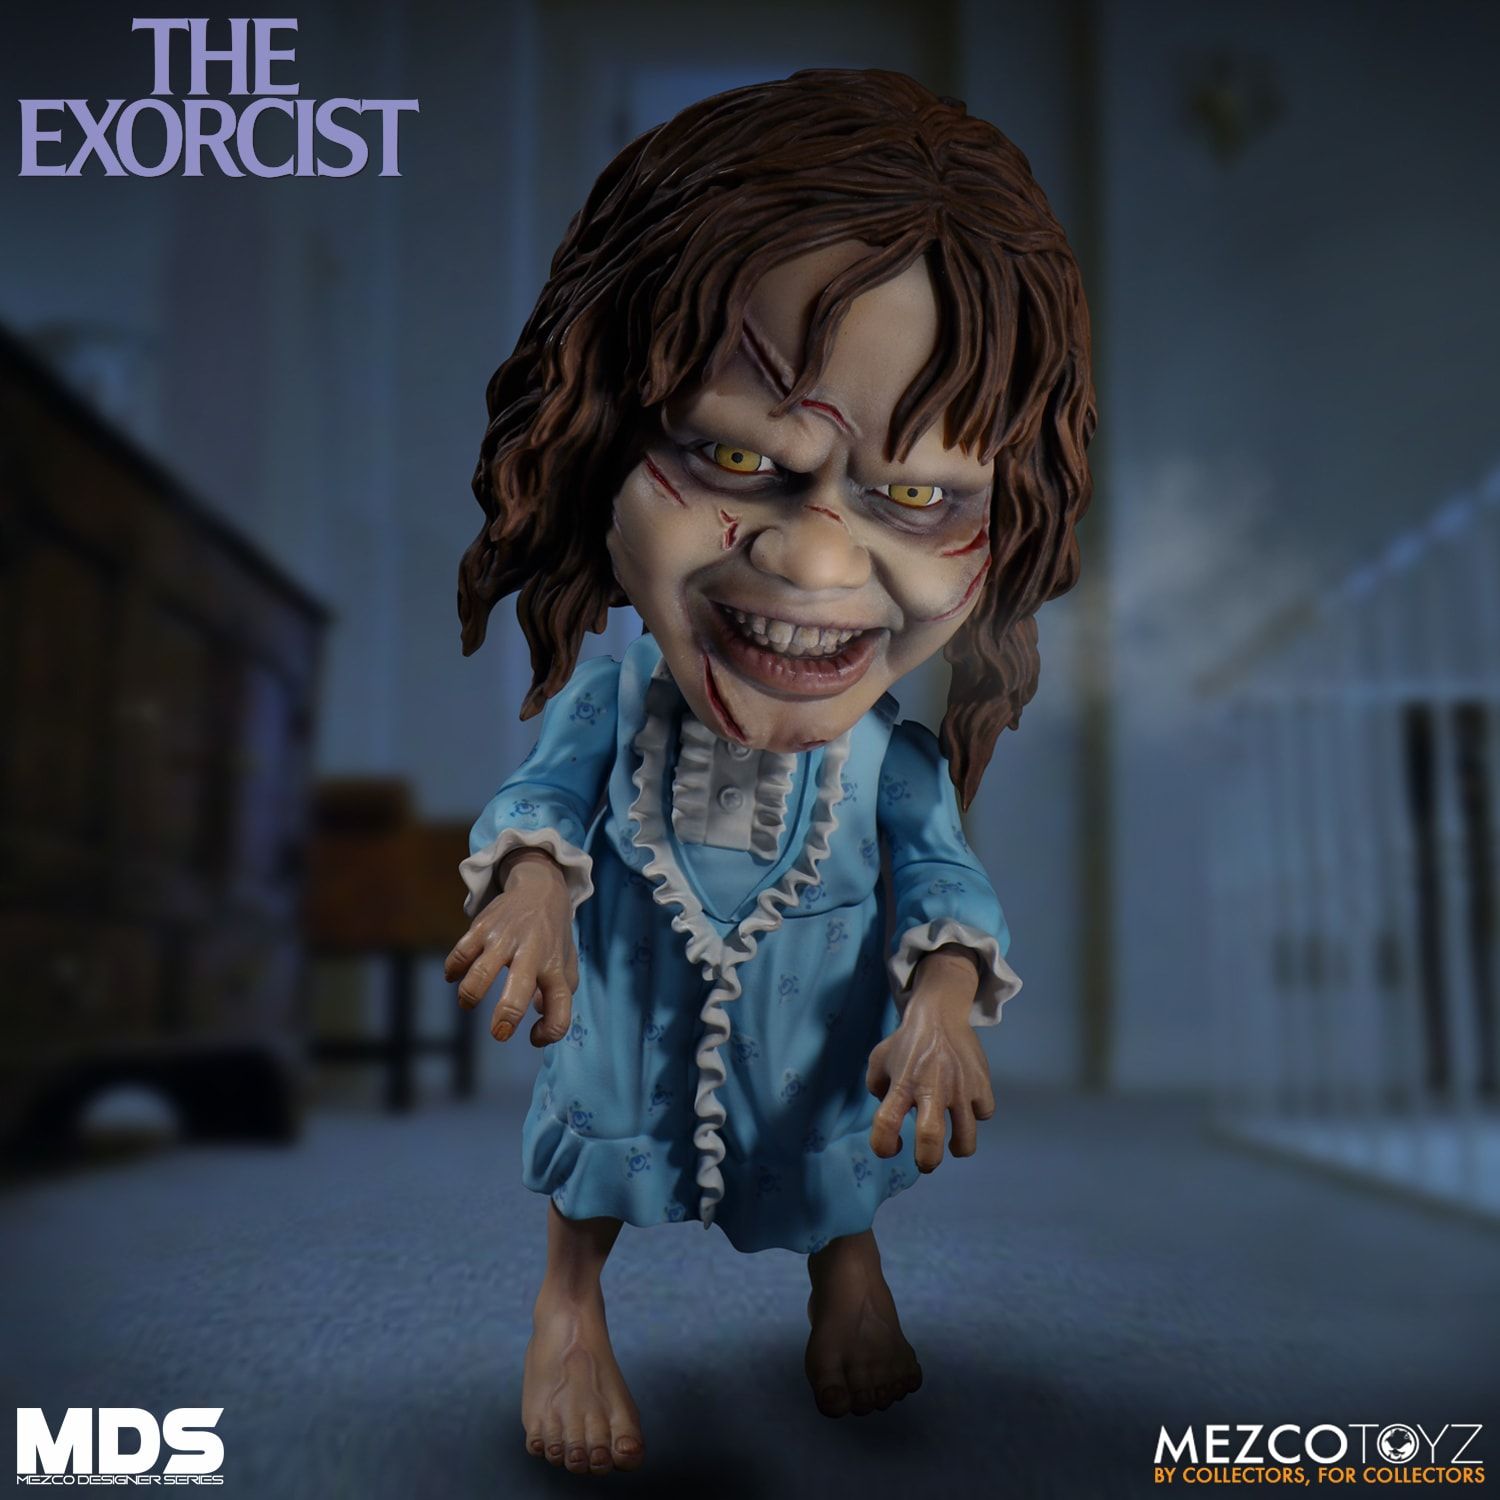 Mezco Designer Series Regan MDS Stylized Action FigureThe Exorcist Halloween 6" 